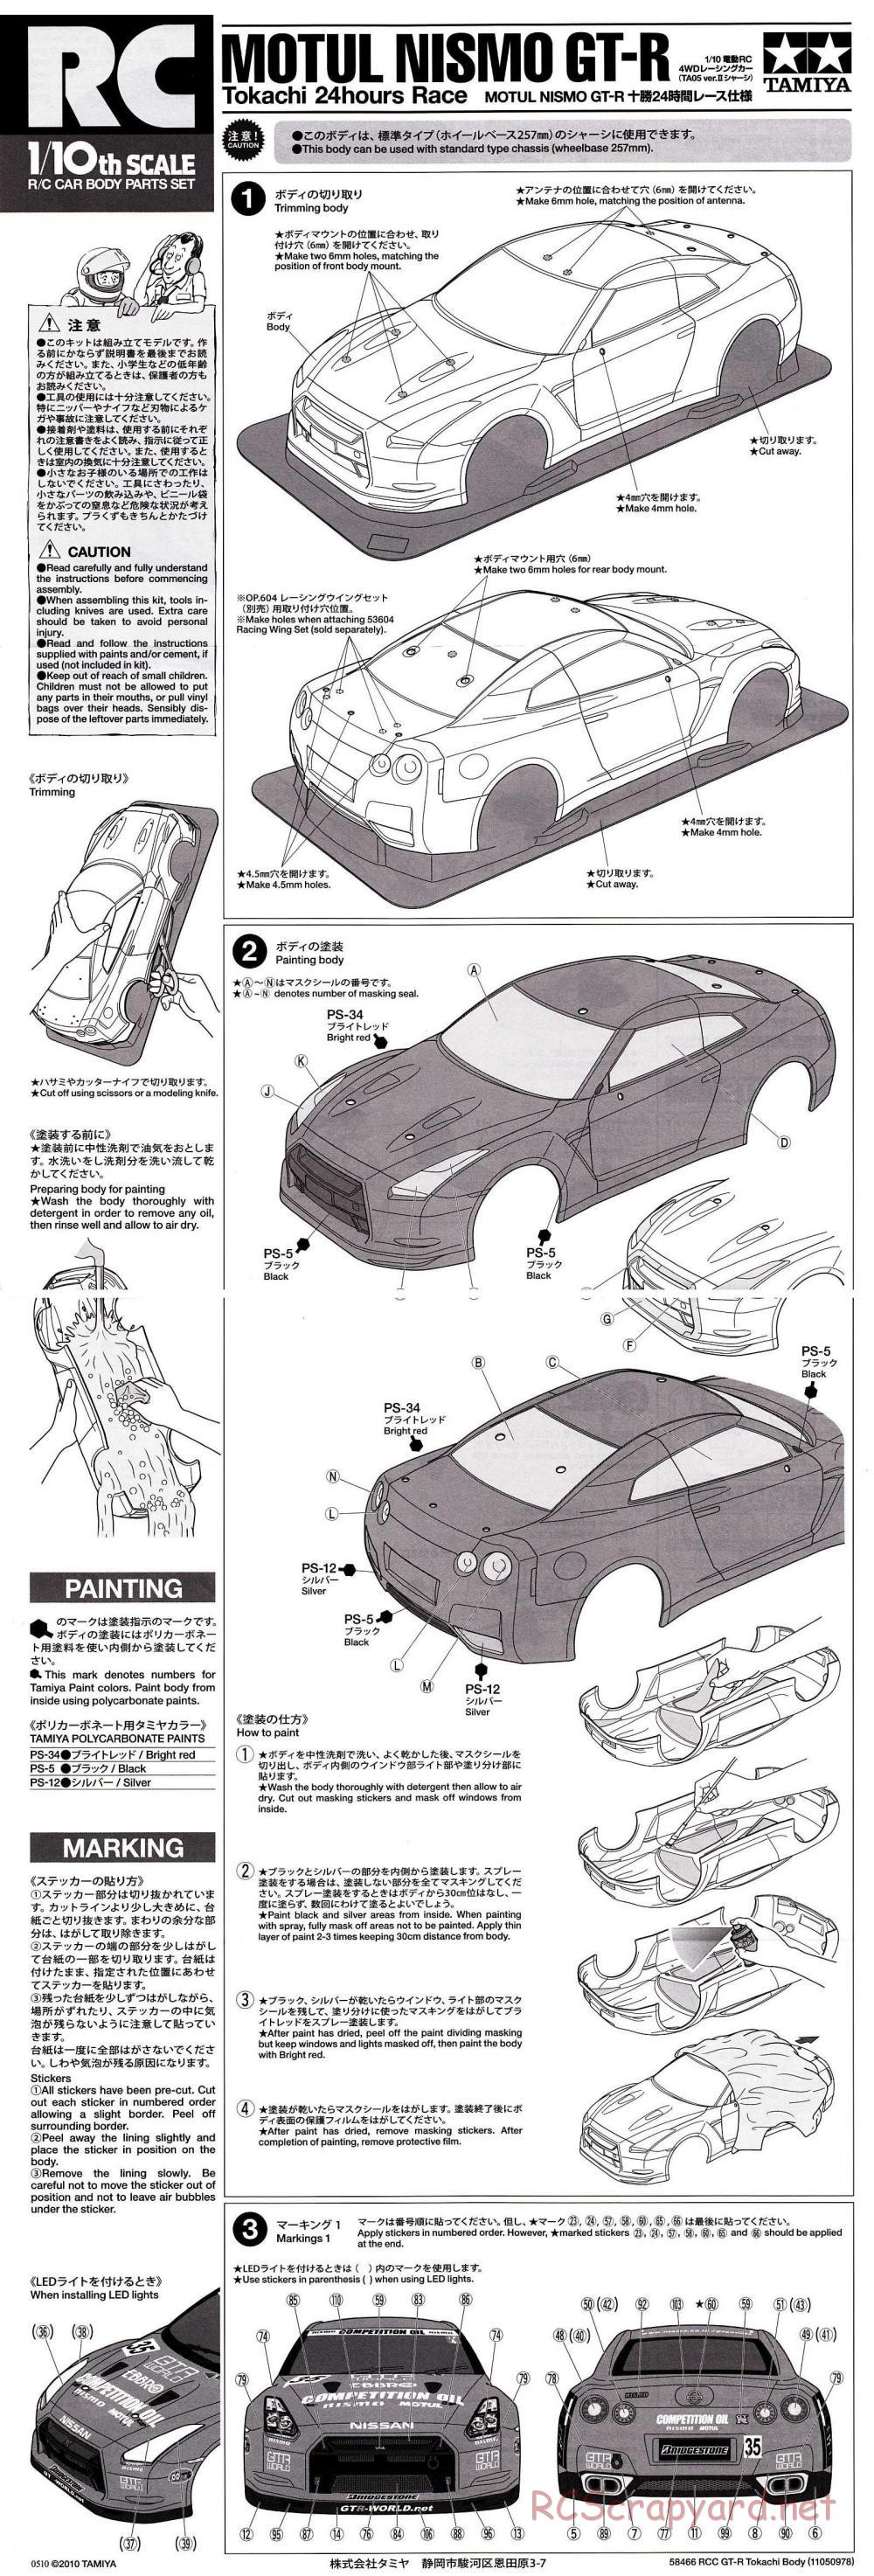 Tamiya - Motul NISMO GT-R Tokachi 24 Hours Race - TA05 Ver.II Chassis - Body Manual - Page 1